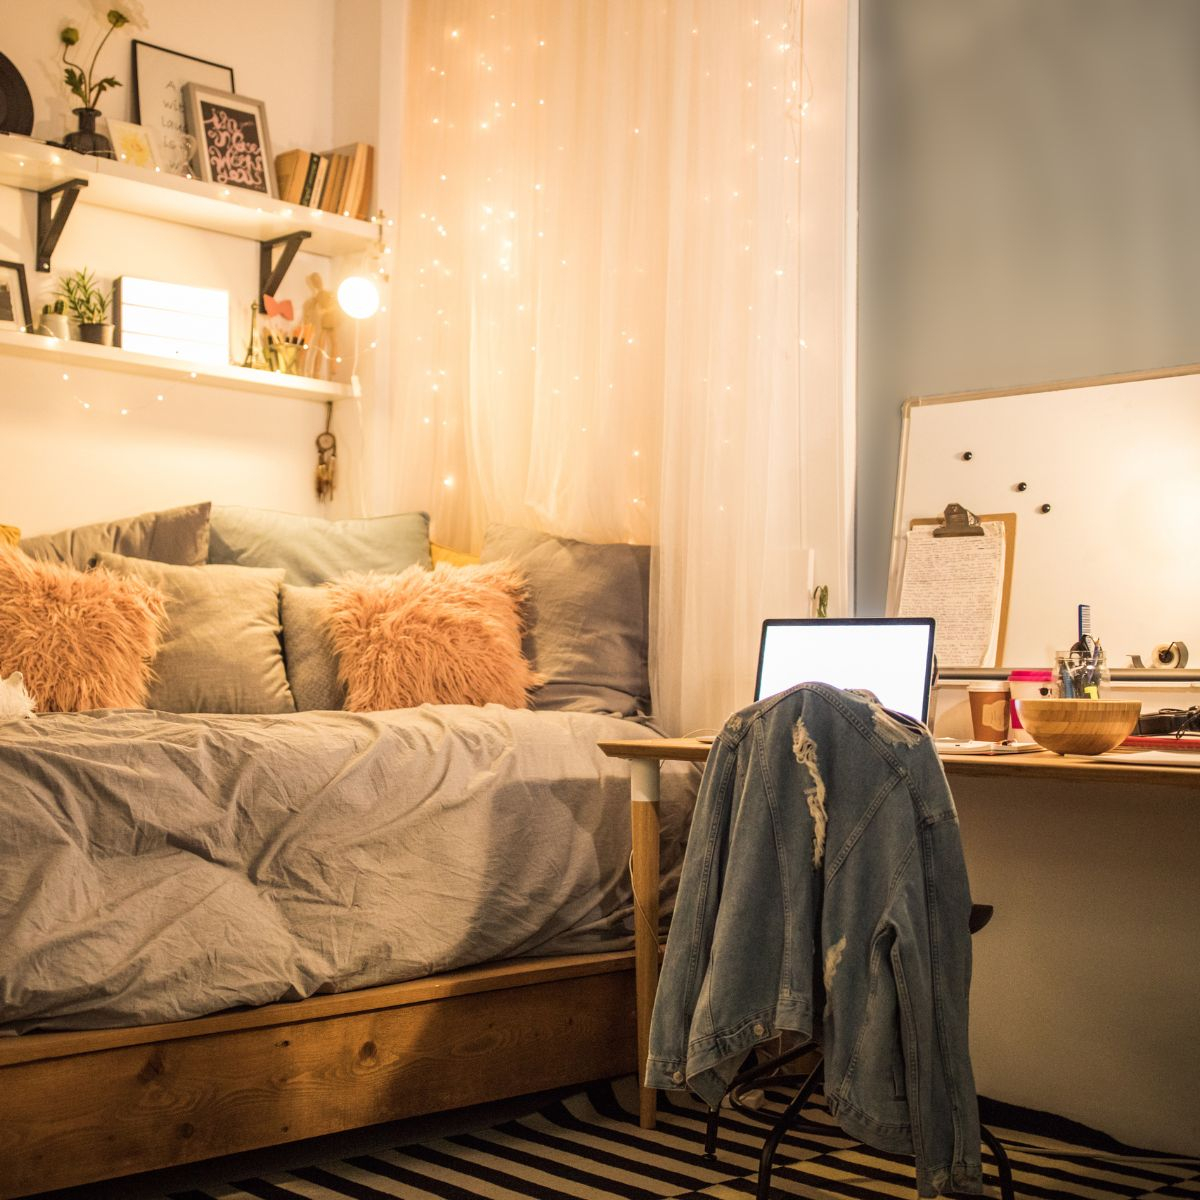 18 Dorm Room Essentials Every College Student Needs